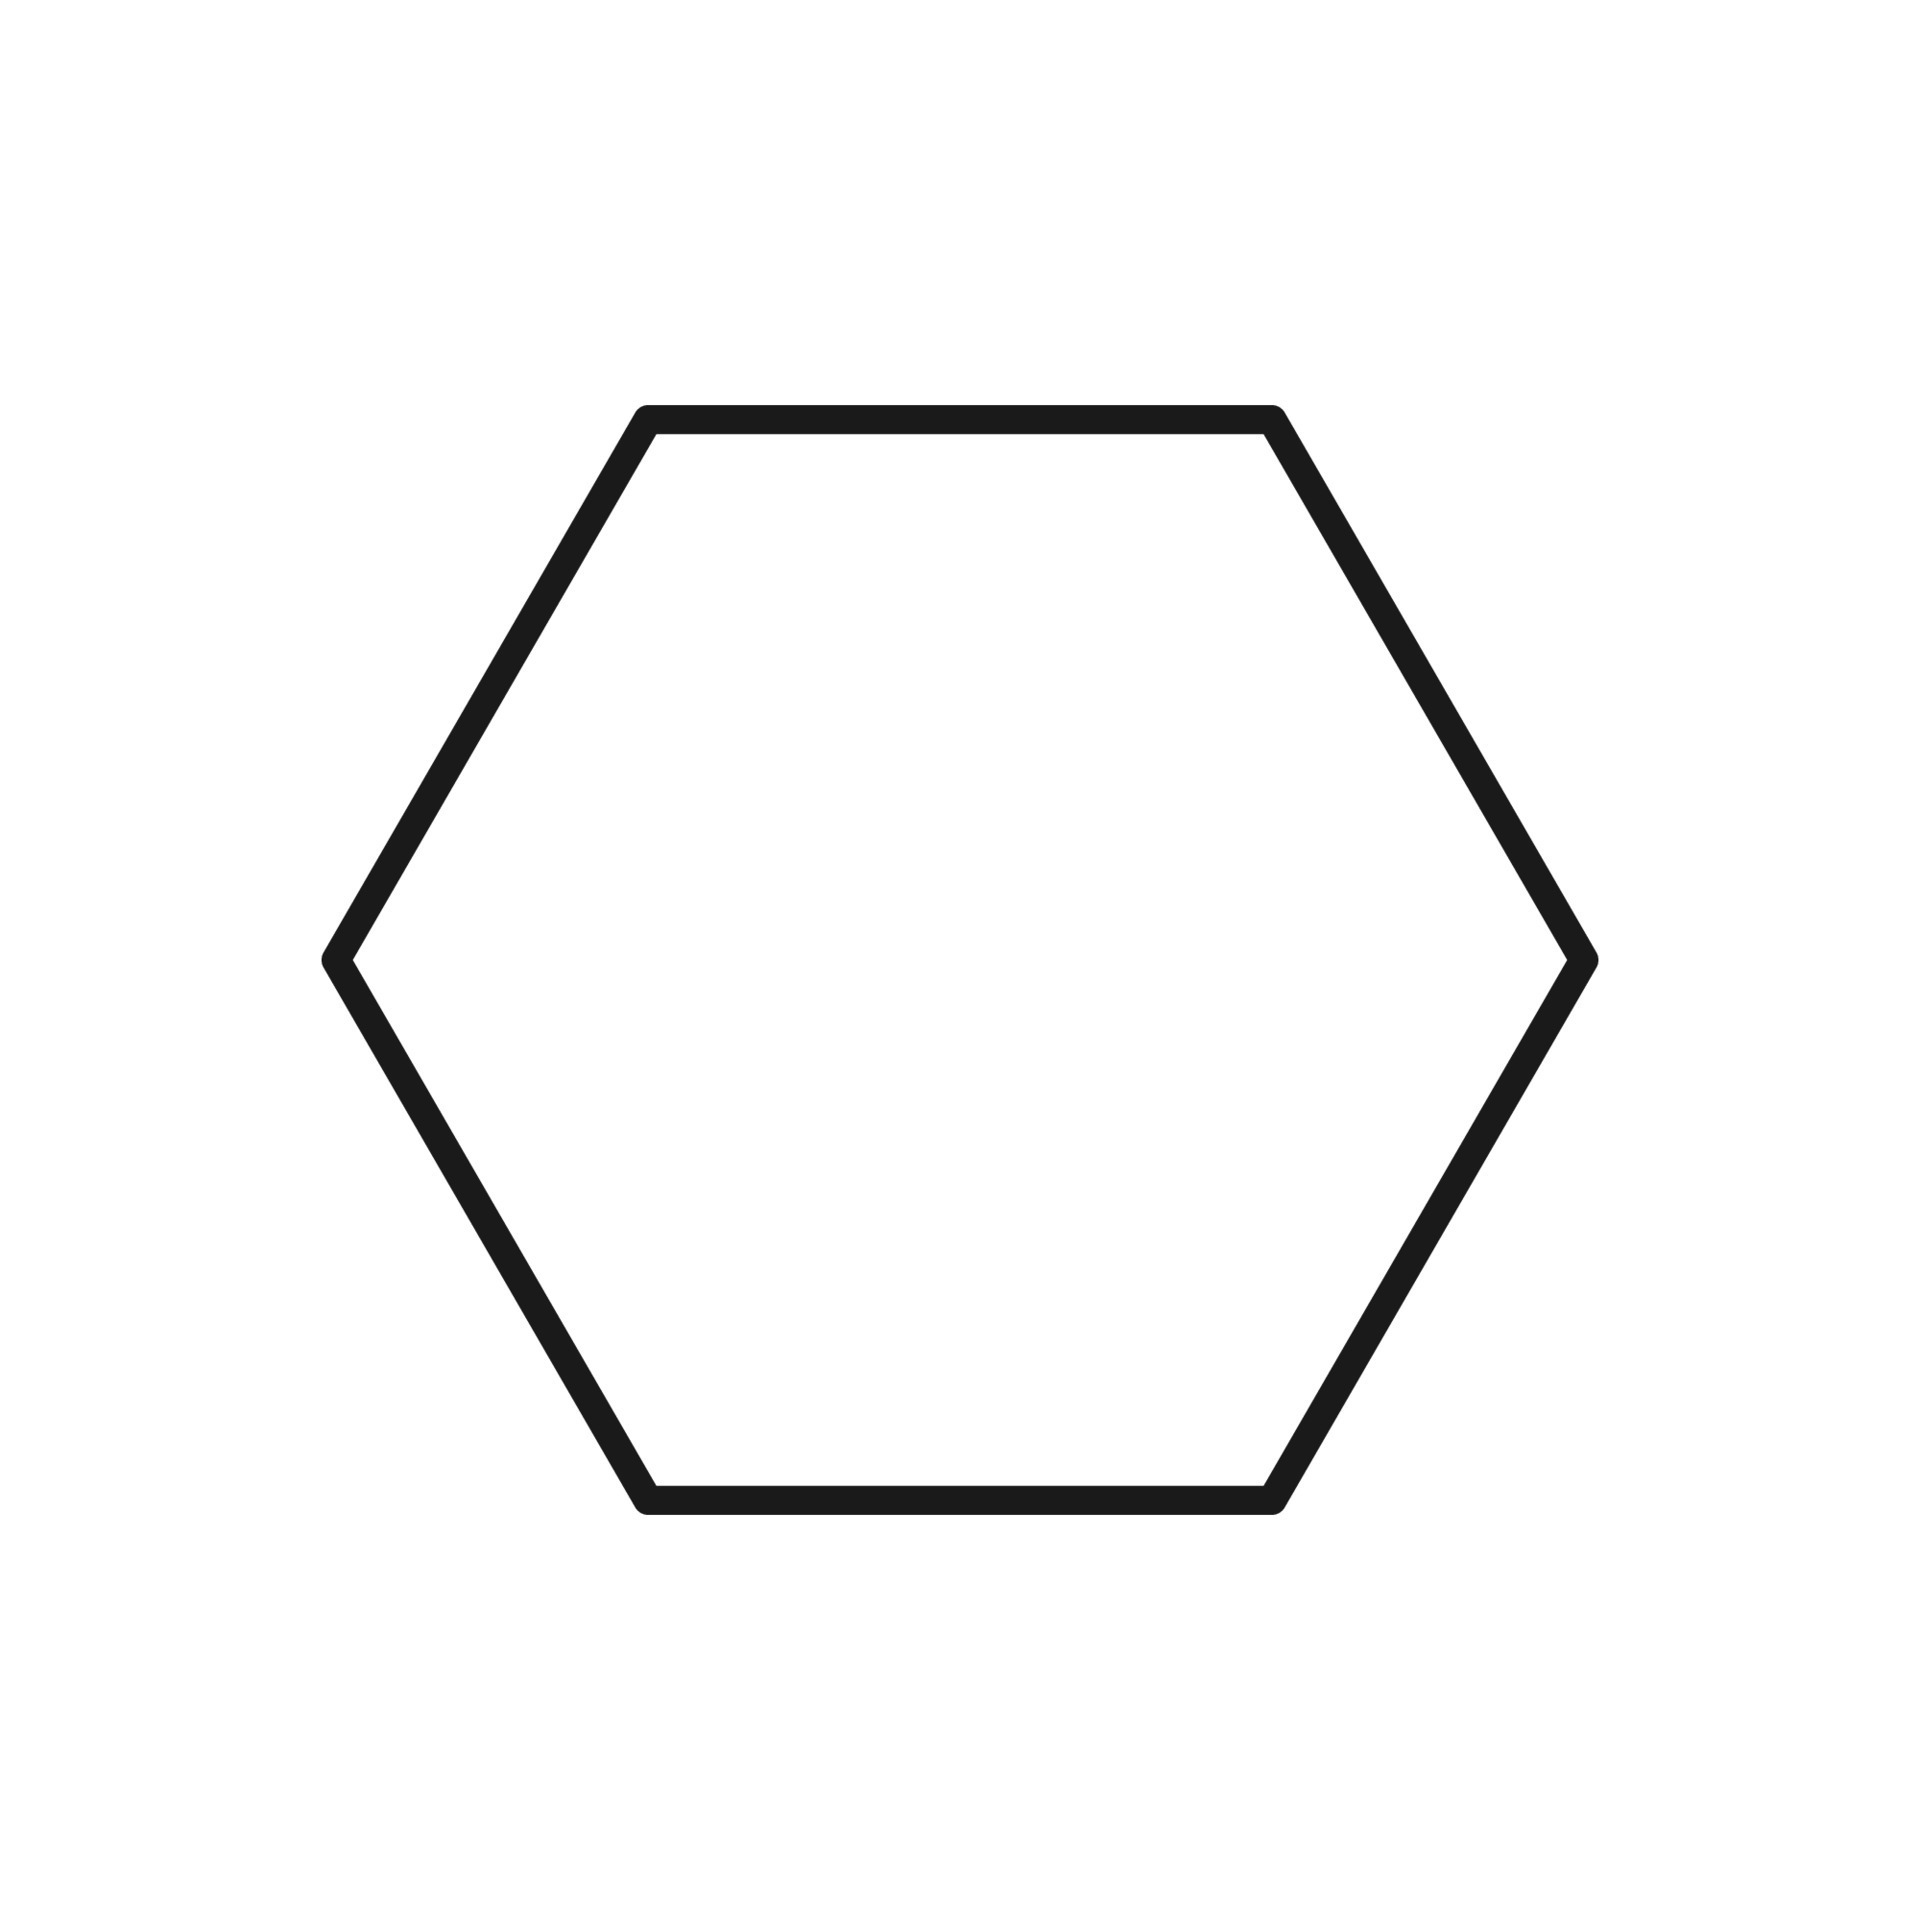 hexagon-shape-symbol-vector-icon-outline-stroke-for-creative-graphic